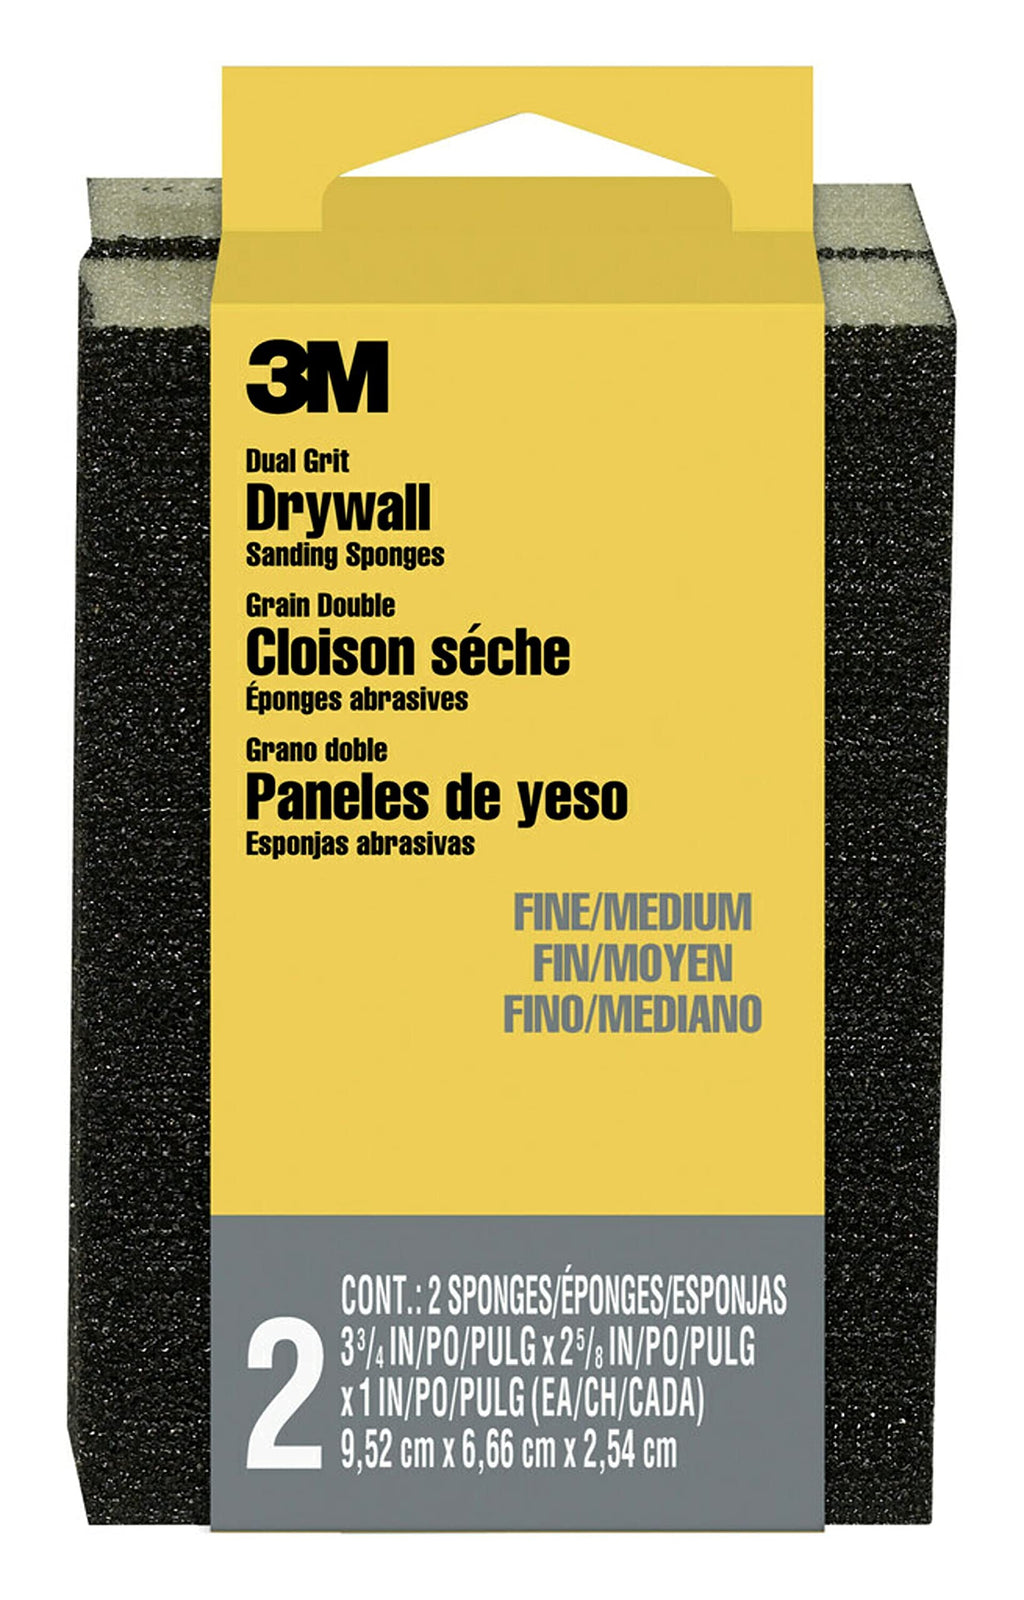  [AUSTRALIA] - 3M Drywall Sanding Sponge, Dual Grit Block, 2 5/8 in x 3 3/4 in x 1 in, Fine/Medium, 2-Pack